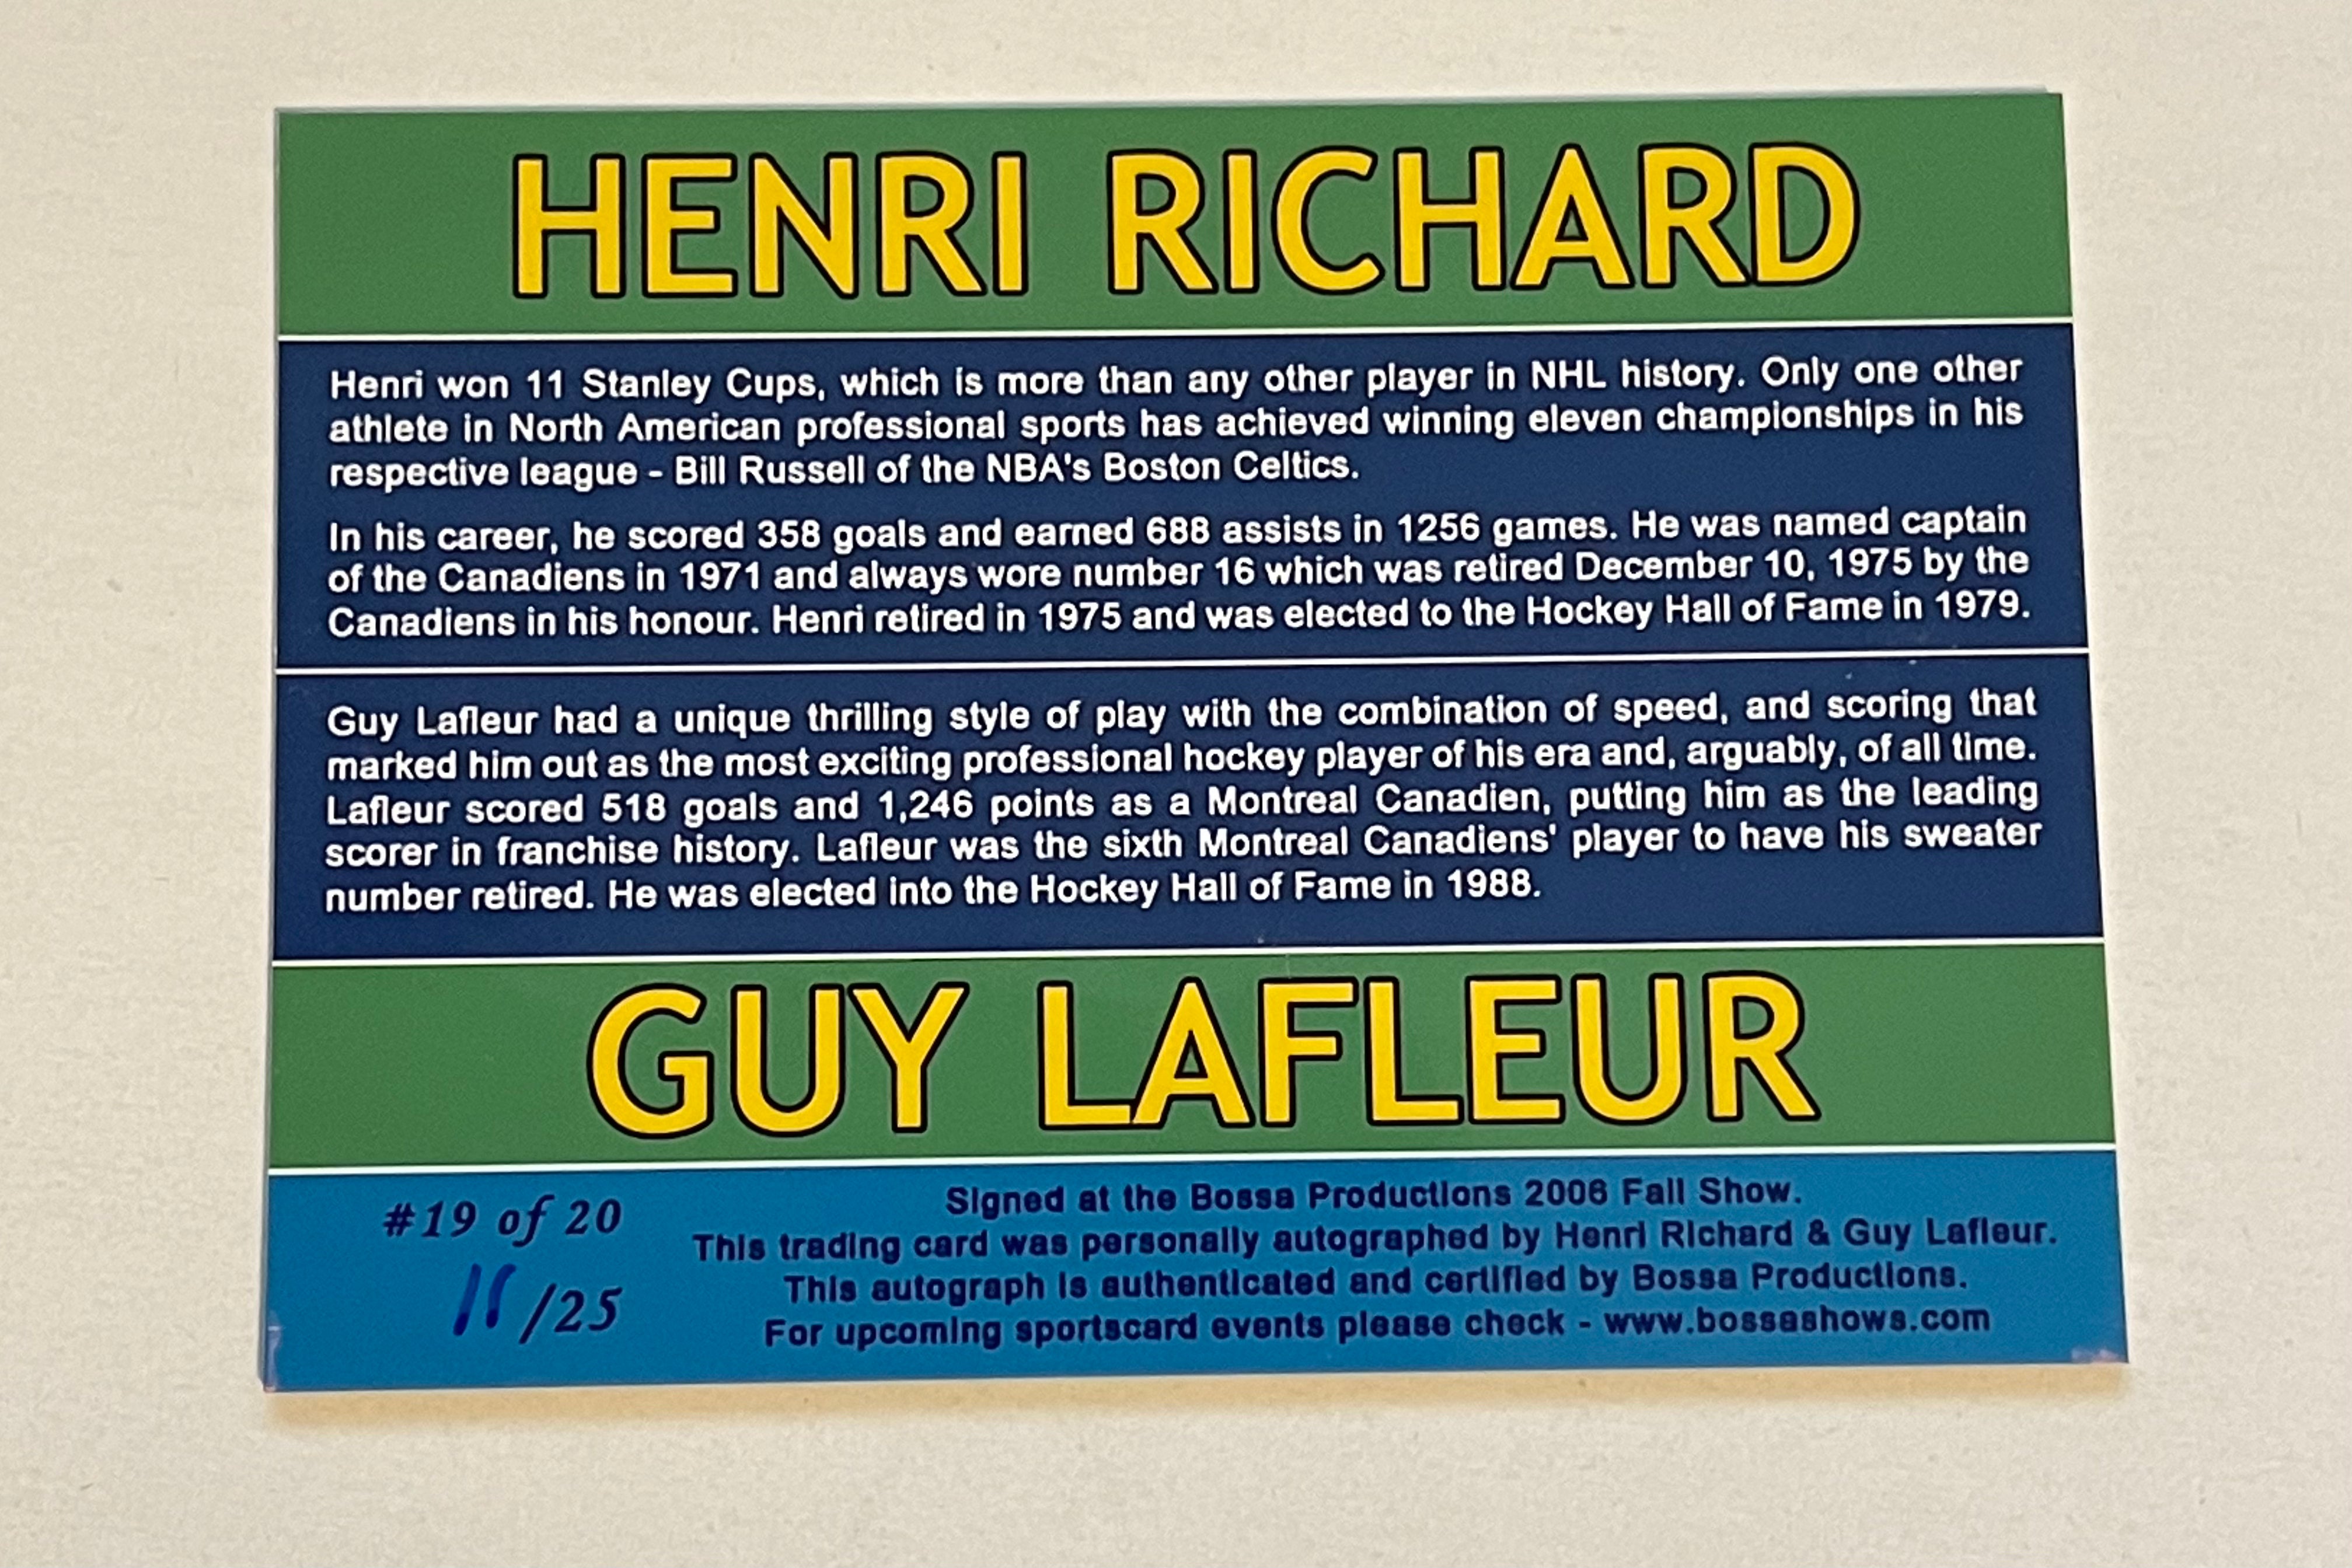 Guy LaFleur and Henri Richard rare numbered autographs card